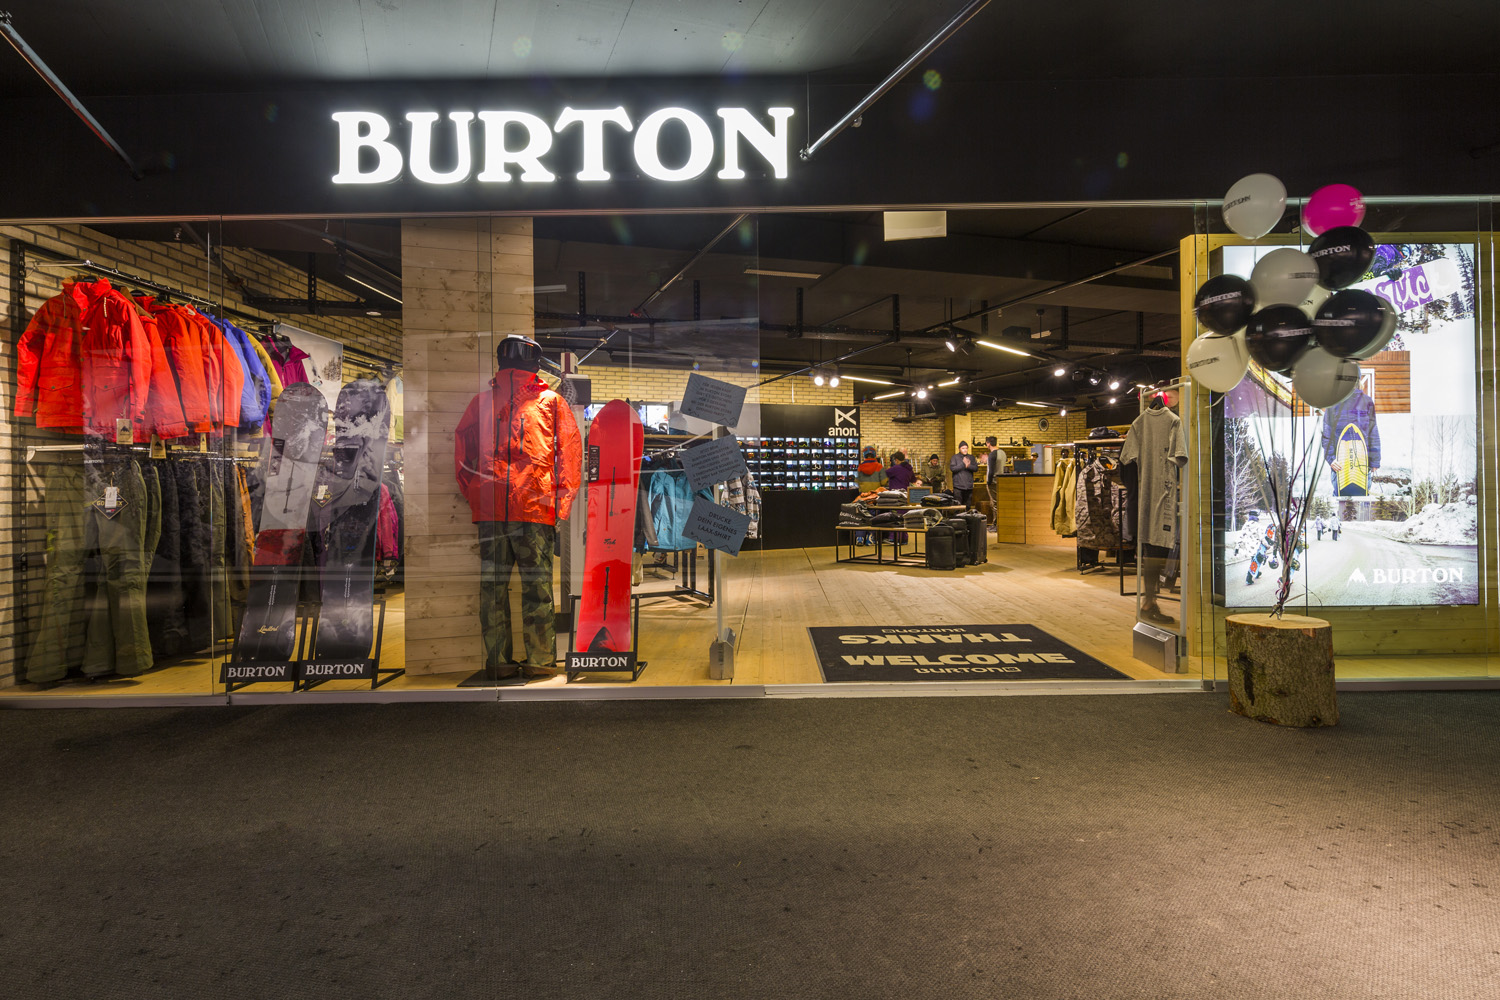 Burton Black Friday Deals, Sales and Ads